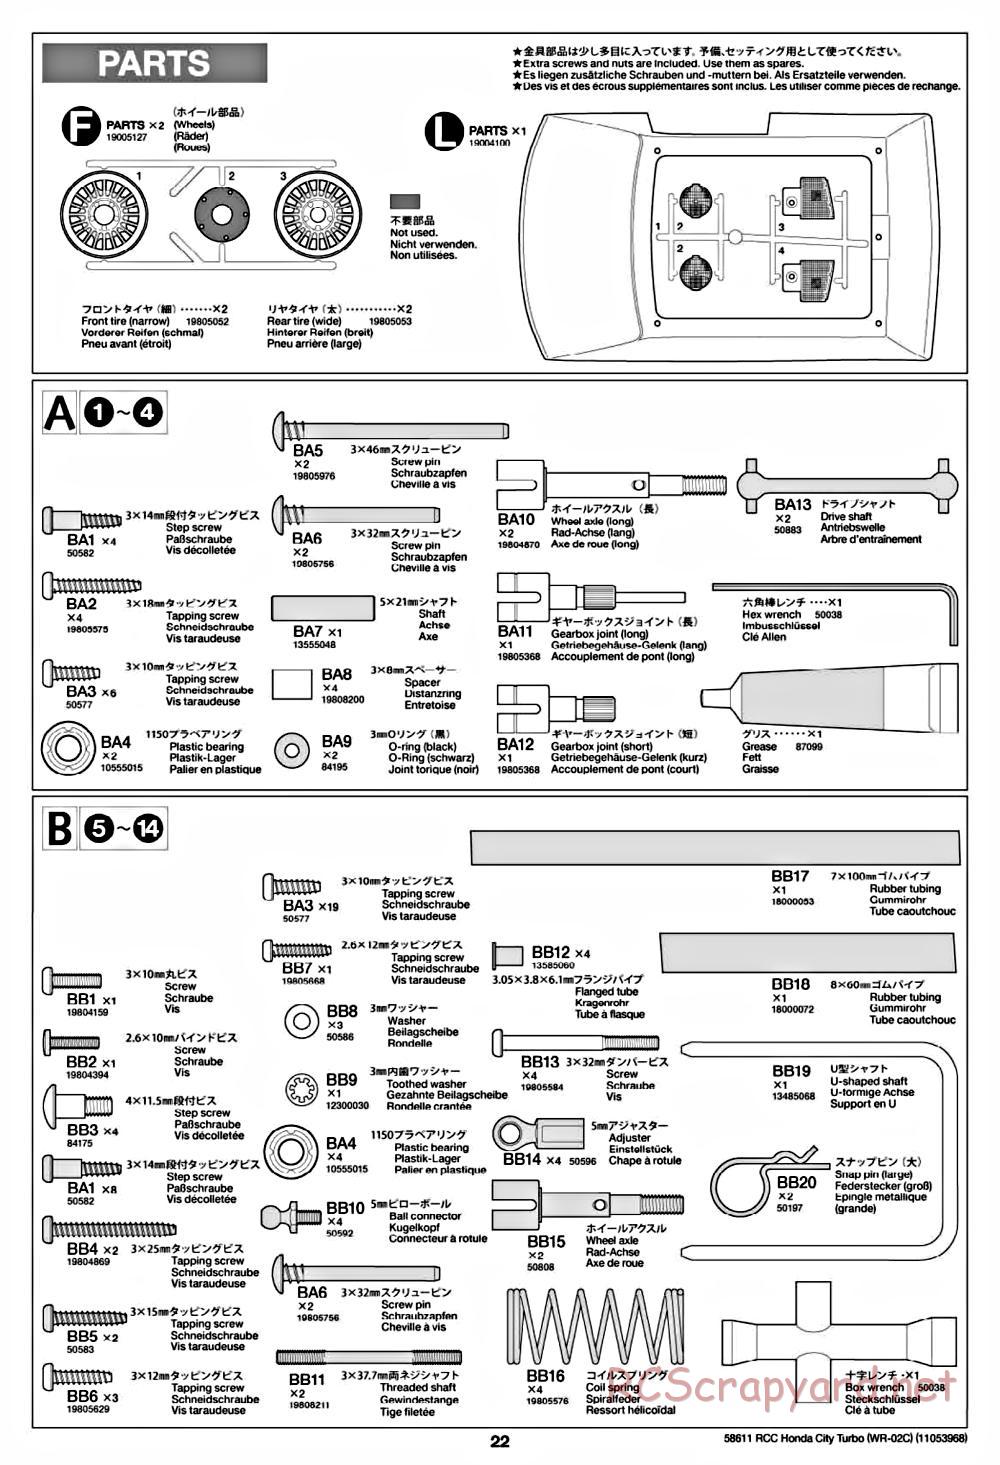 Tamiya - WR-02C Chassis - Manual - Page 22